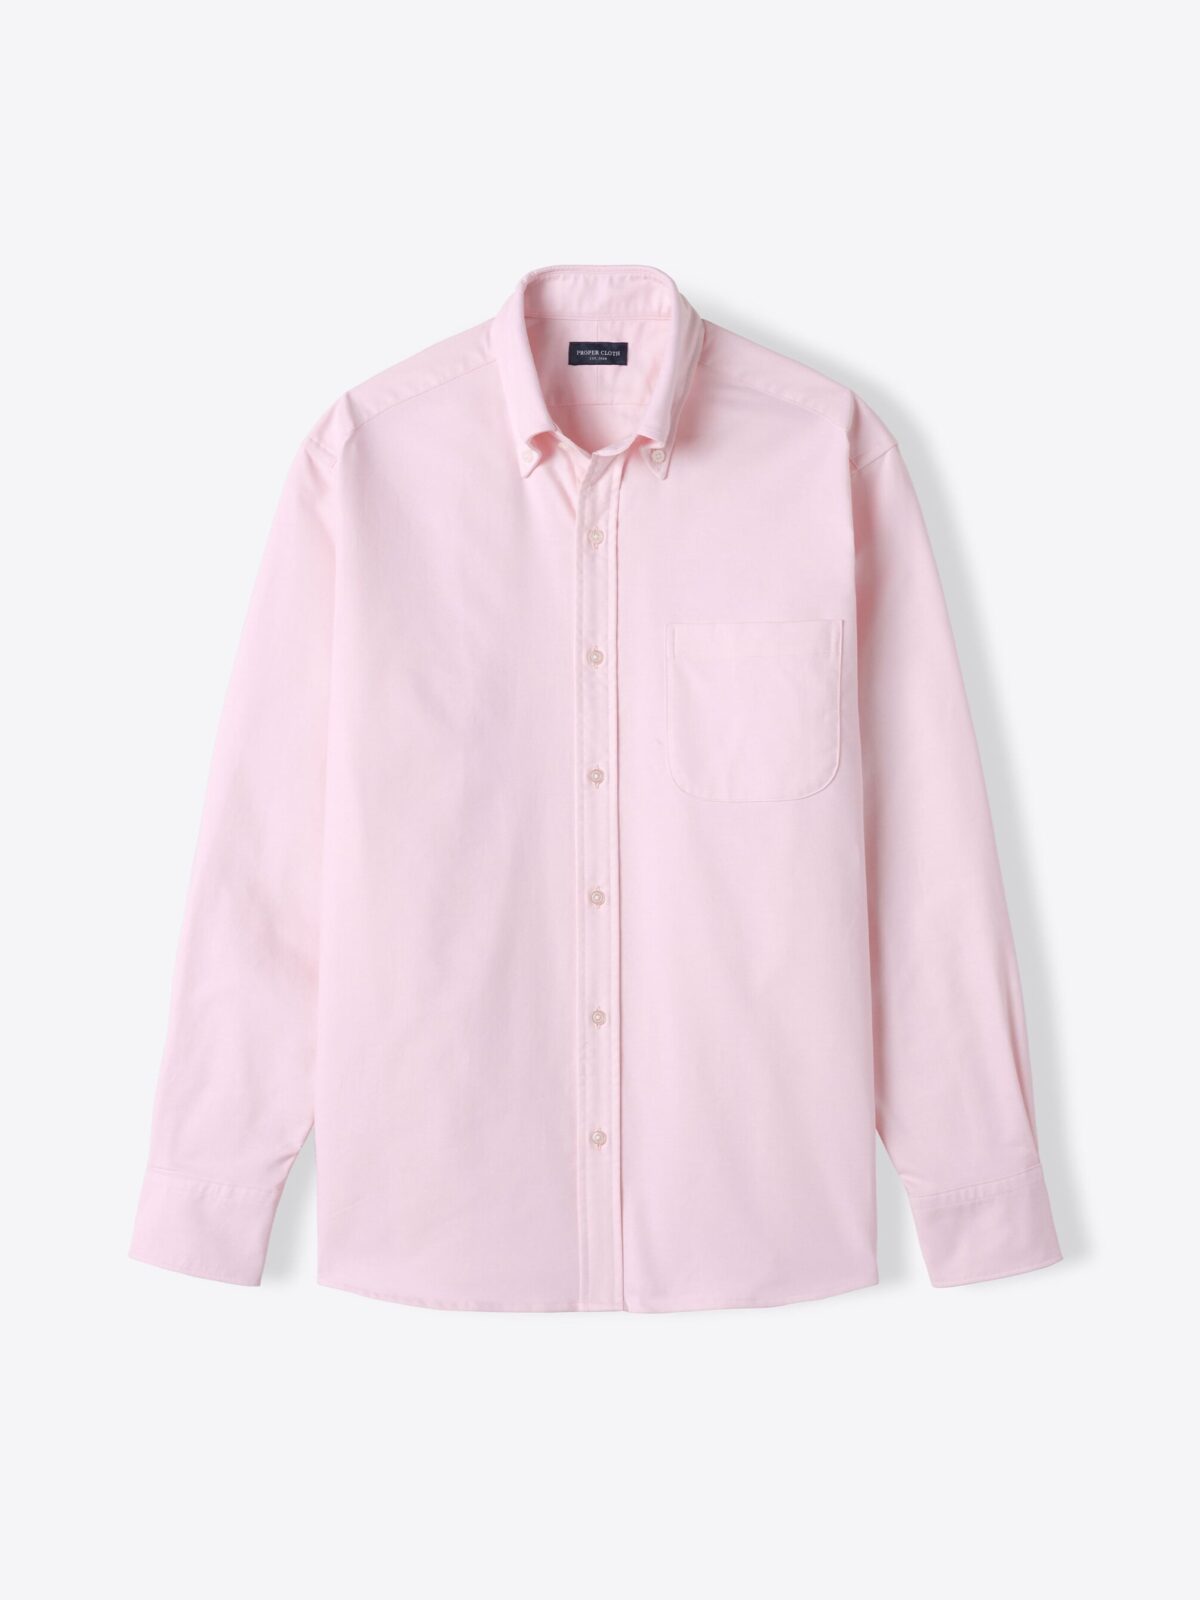 Thomas Mason Pink Premium Oxford Cloth Shirt by Proper Cloth